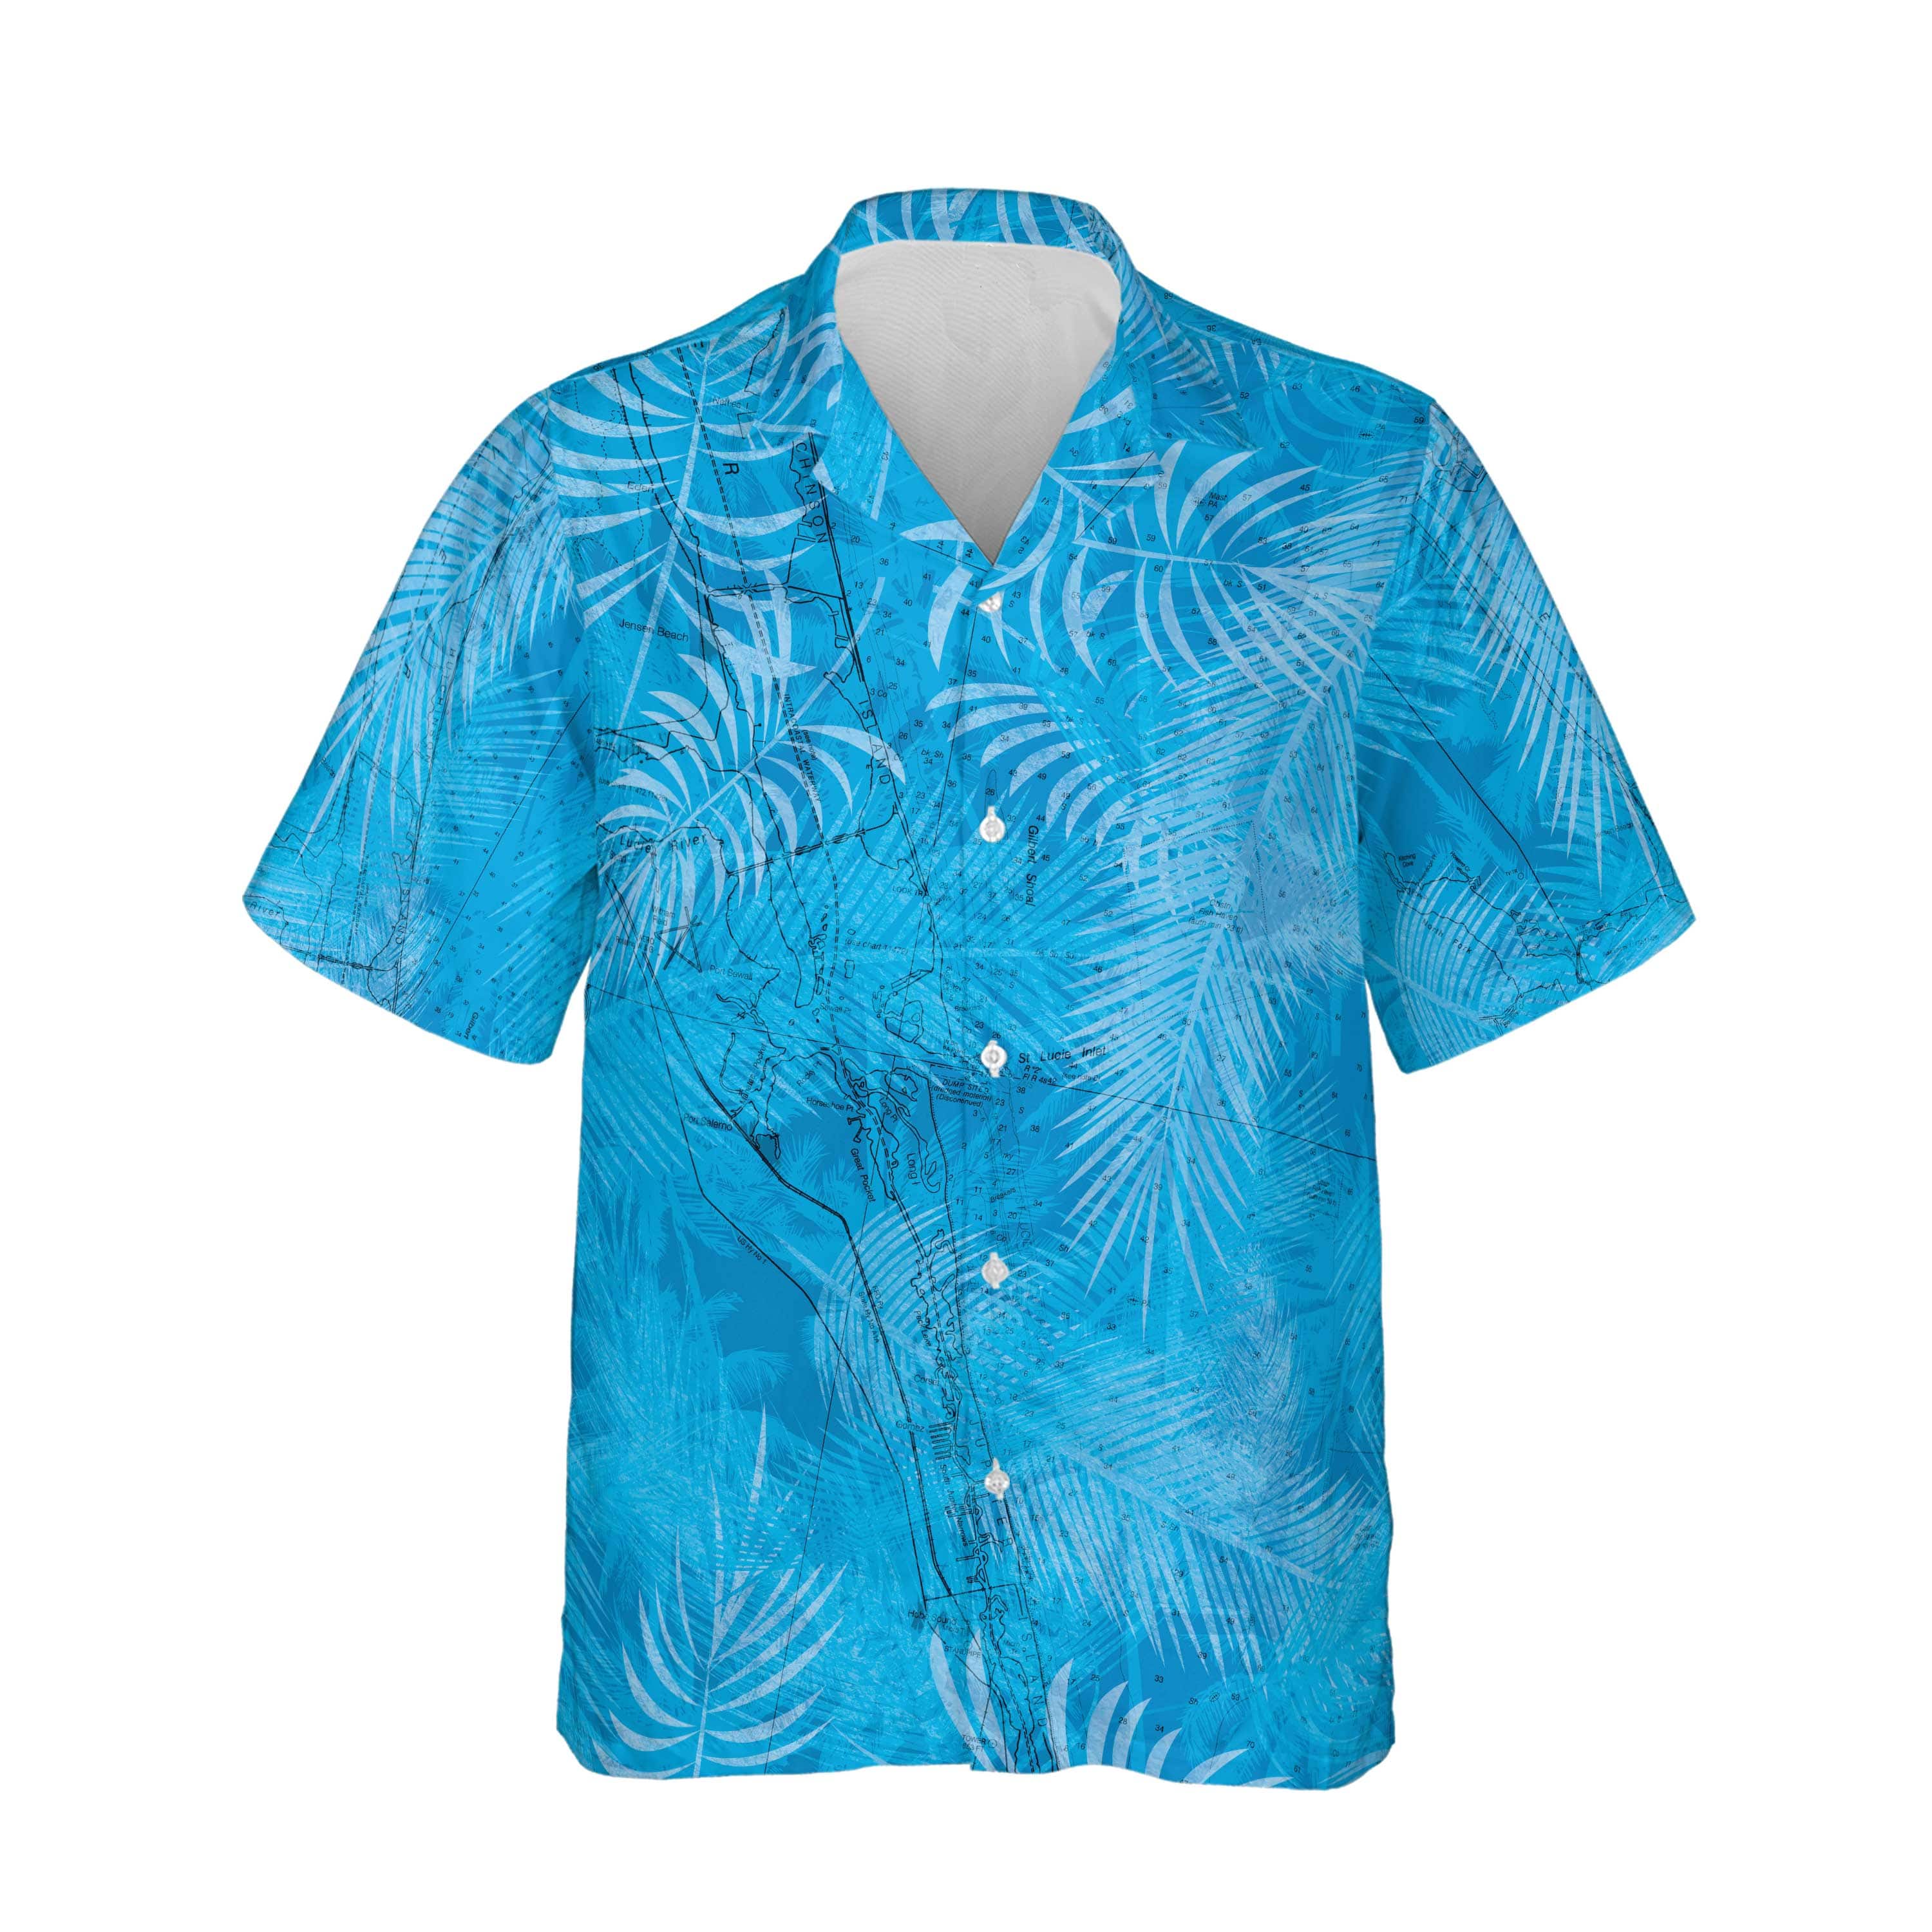 The Treasure Coast North Tropical Blue Shirt